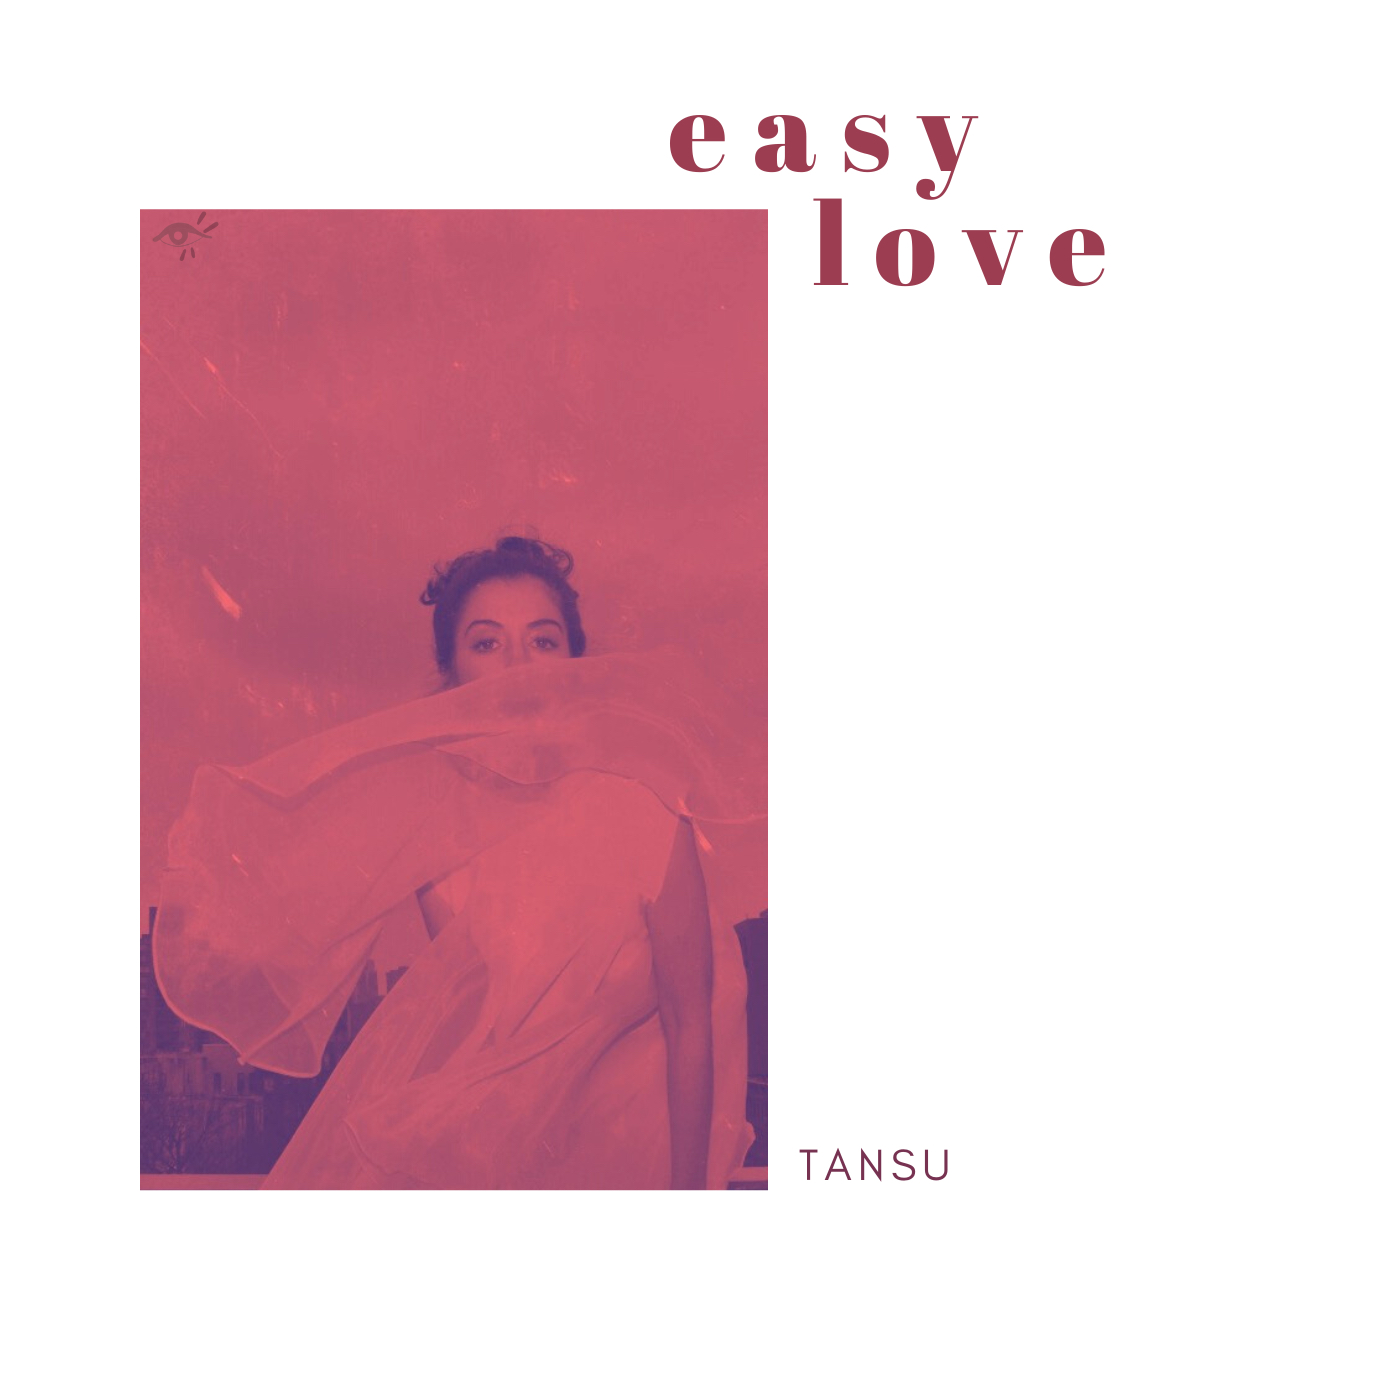 LISTEN: “Easy Love” by TANSU